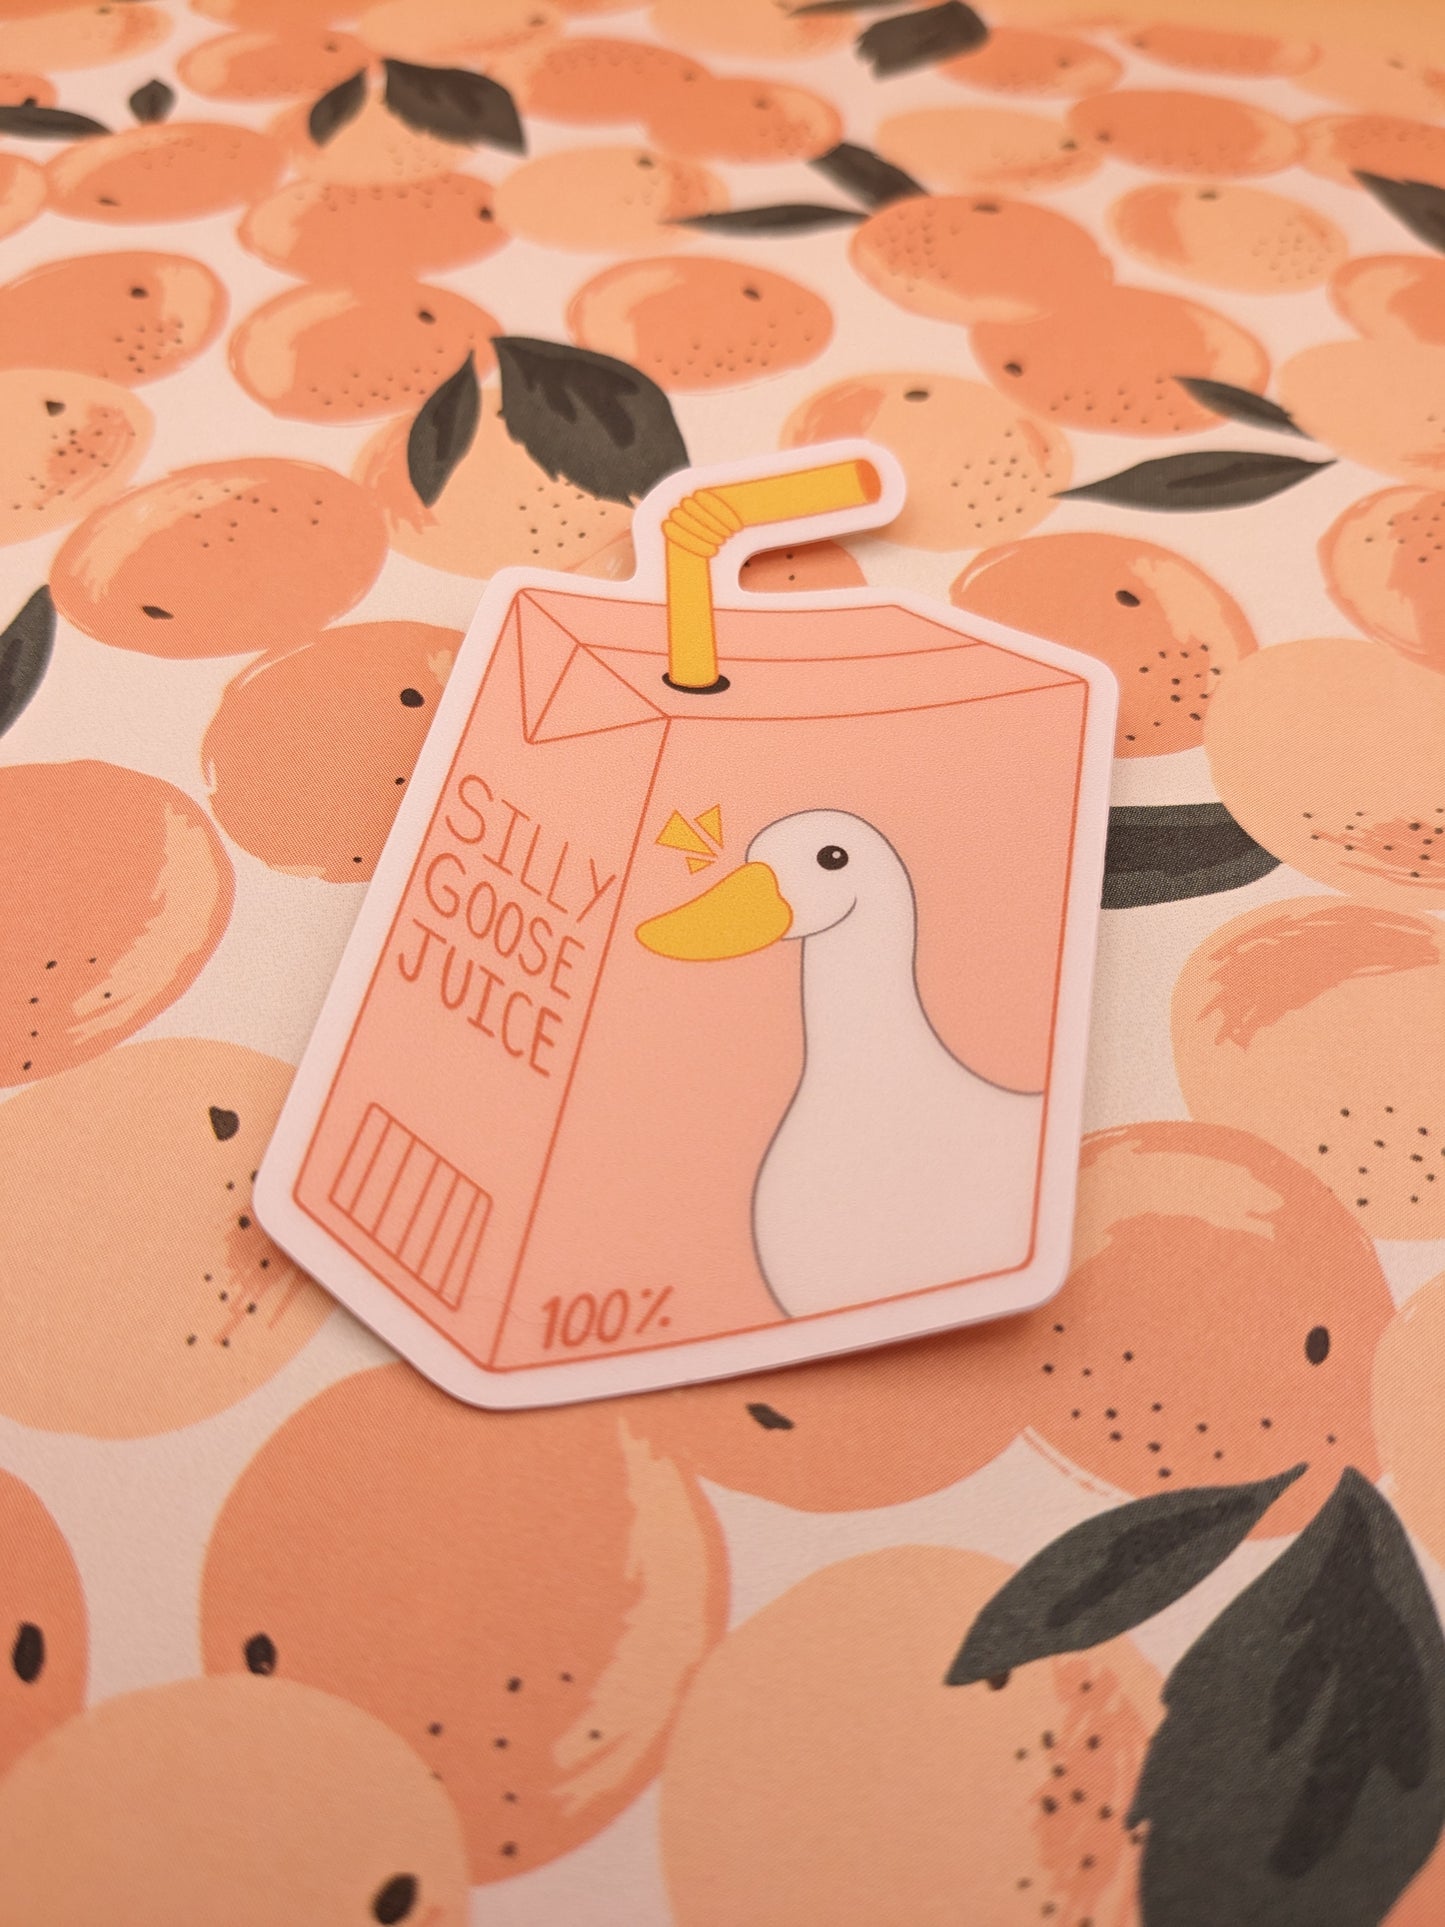 Silly Goose Juice | Sticker